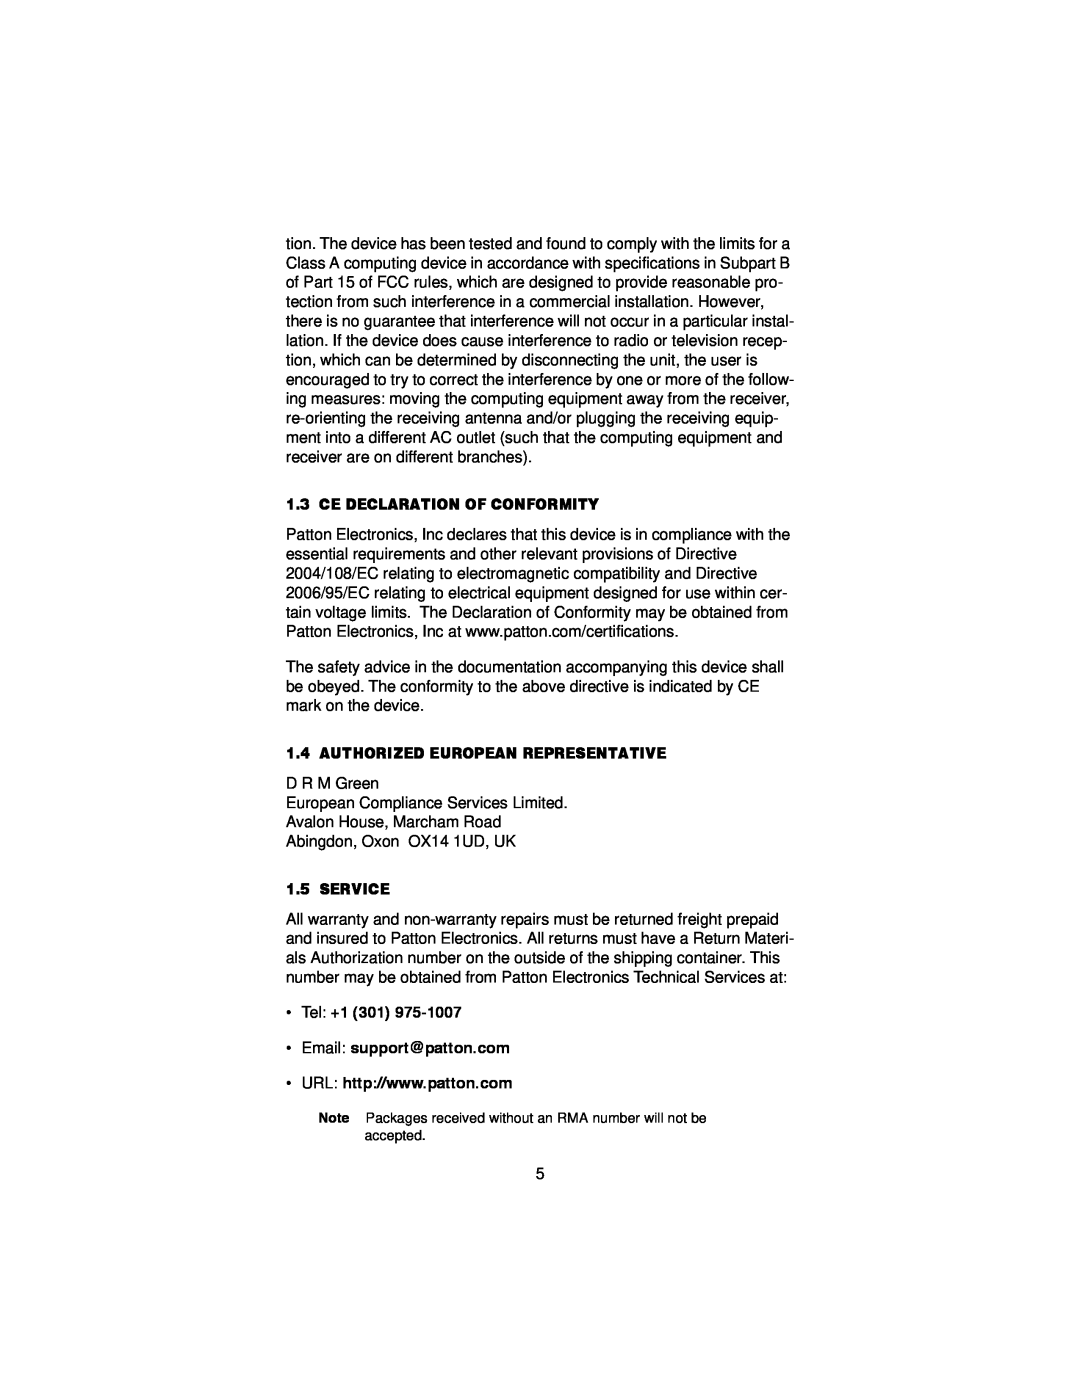 Patton electronic 2174 user manual Ce Declaration Of Conformity, Authorized European Representative, Service 